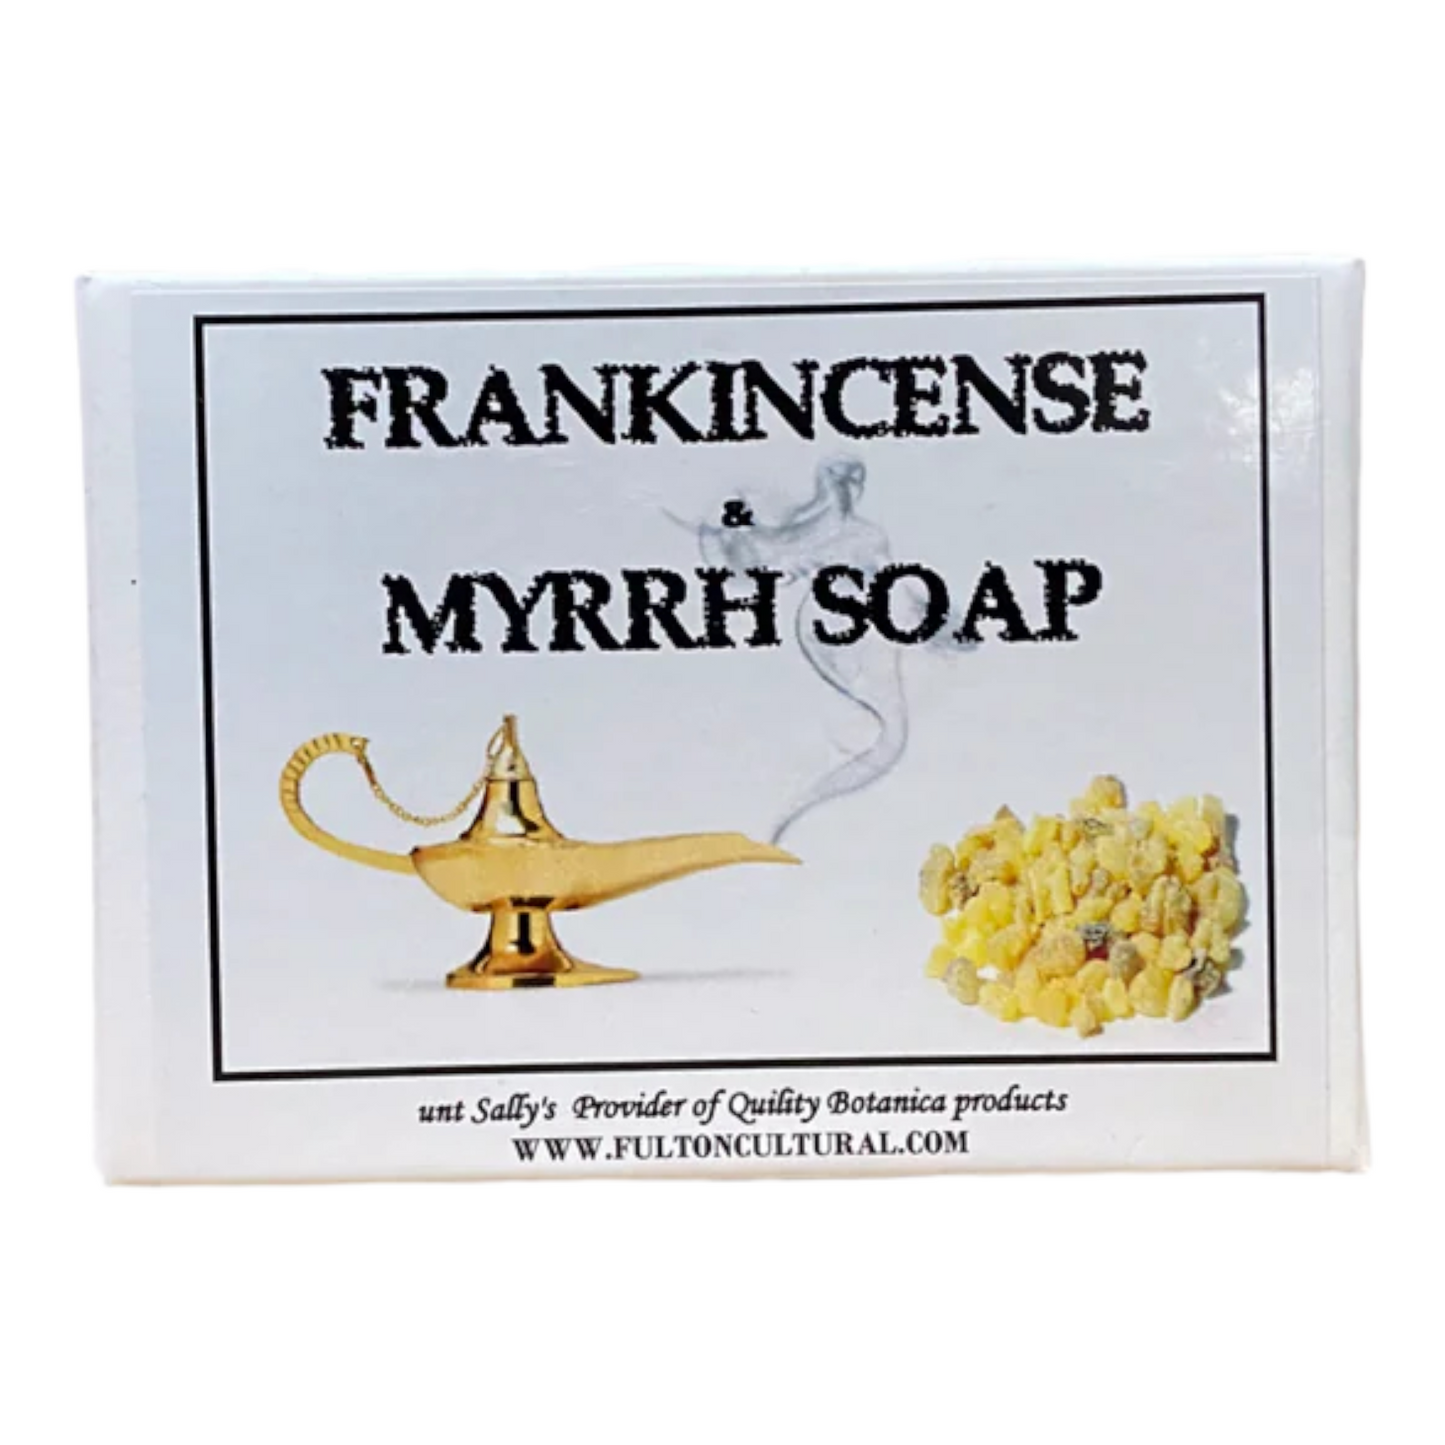 Frankincense and Myrrh Bar Soap